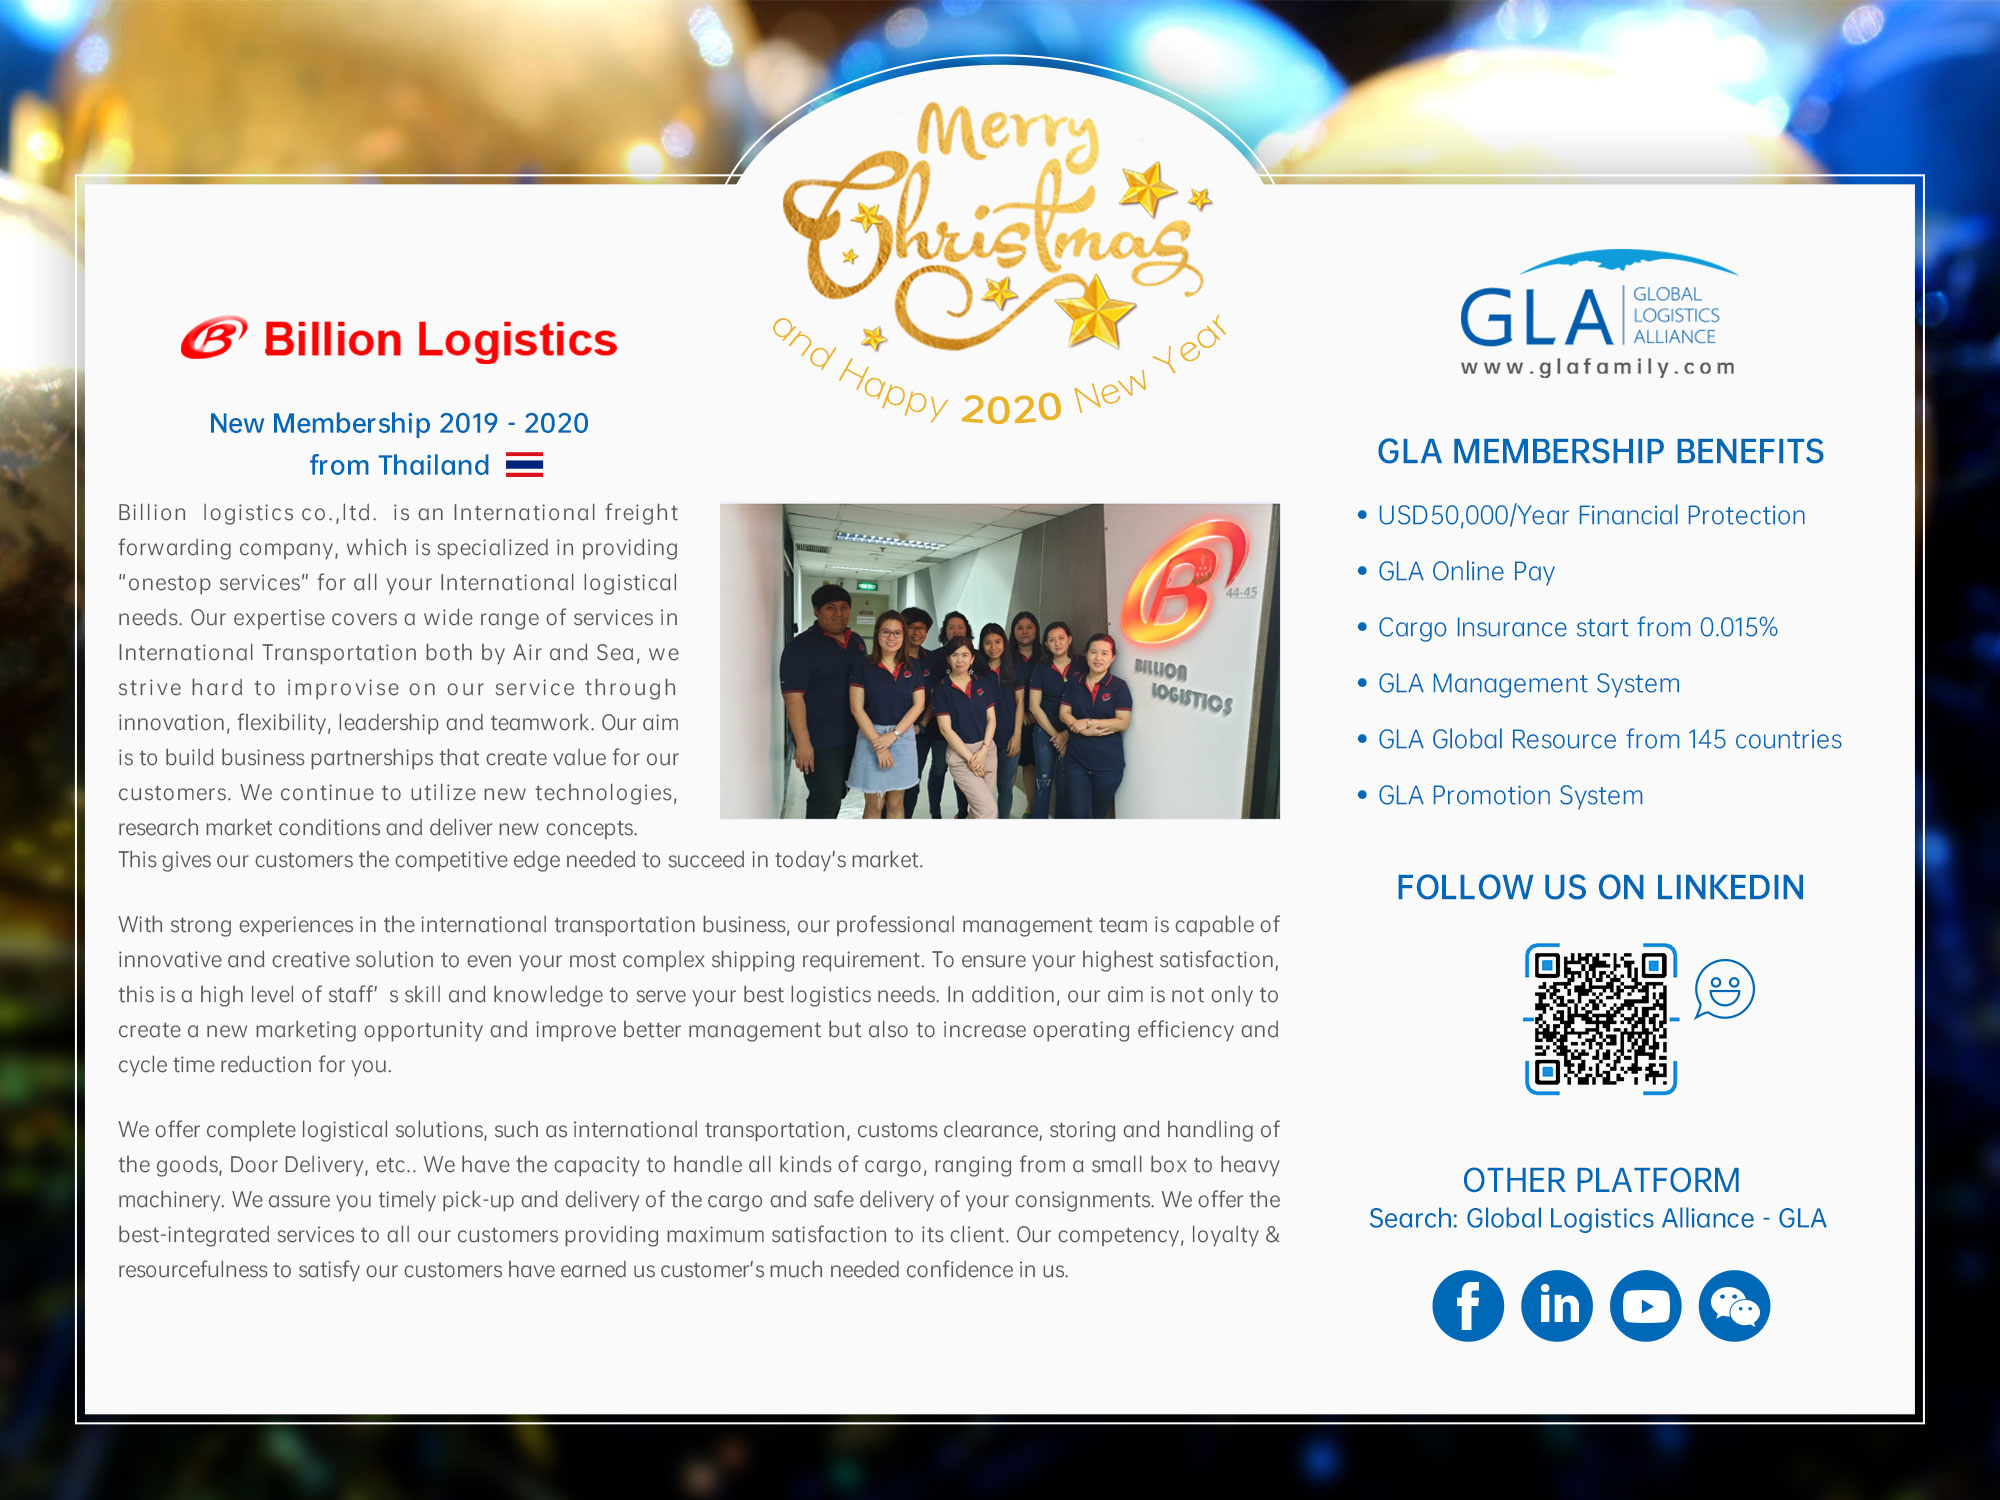 GLA NEW MEMBERSHIP | BILLION LOGISTICS CO. LTD. representing Thailand